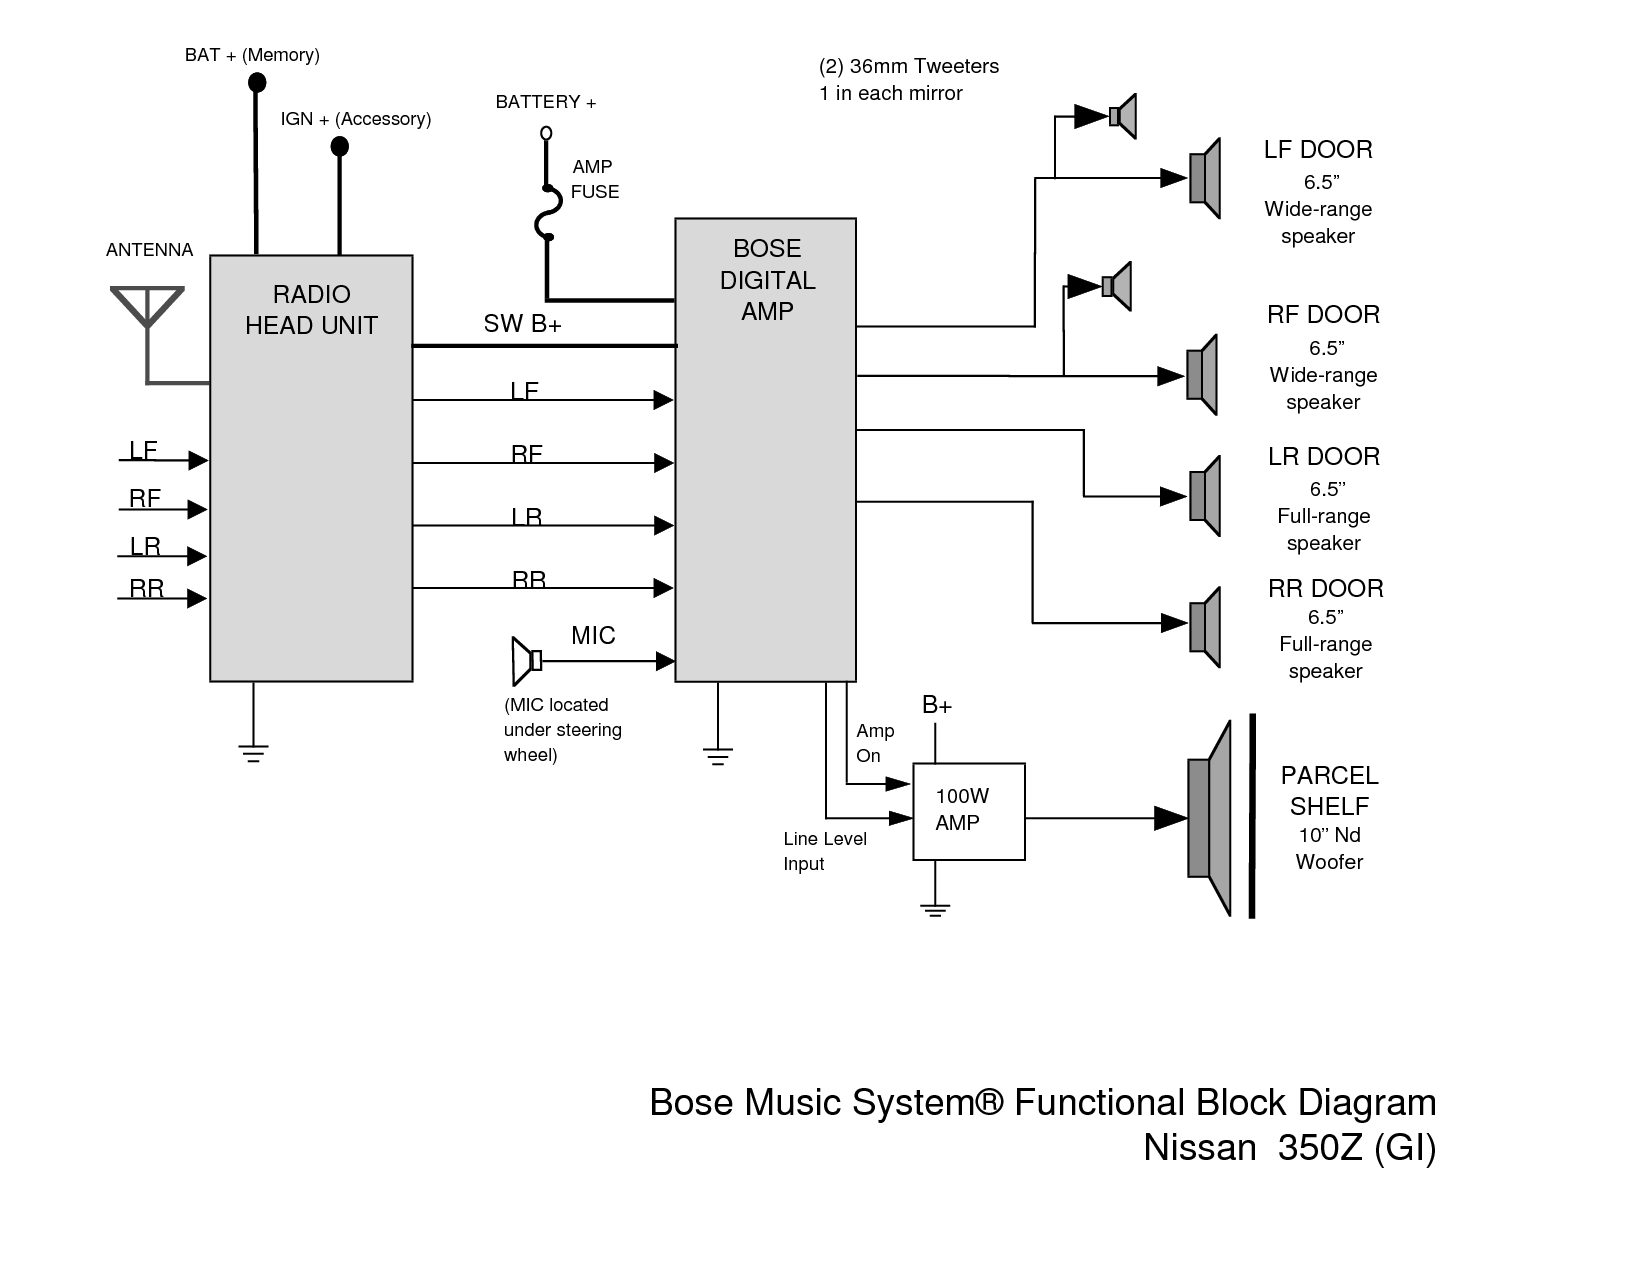 '03 Bose speakers specs - MY350Z.COM - Nissan 350Z and 370Z Forum